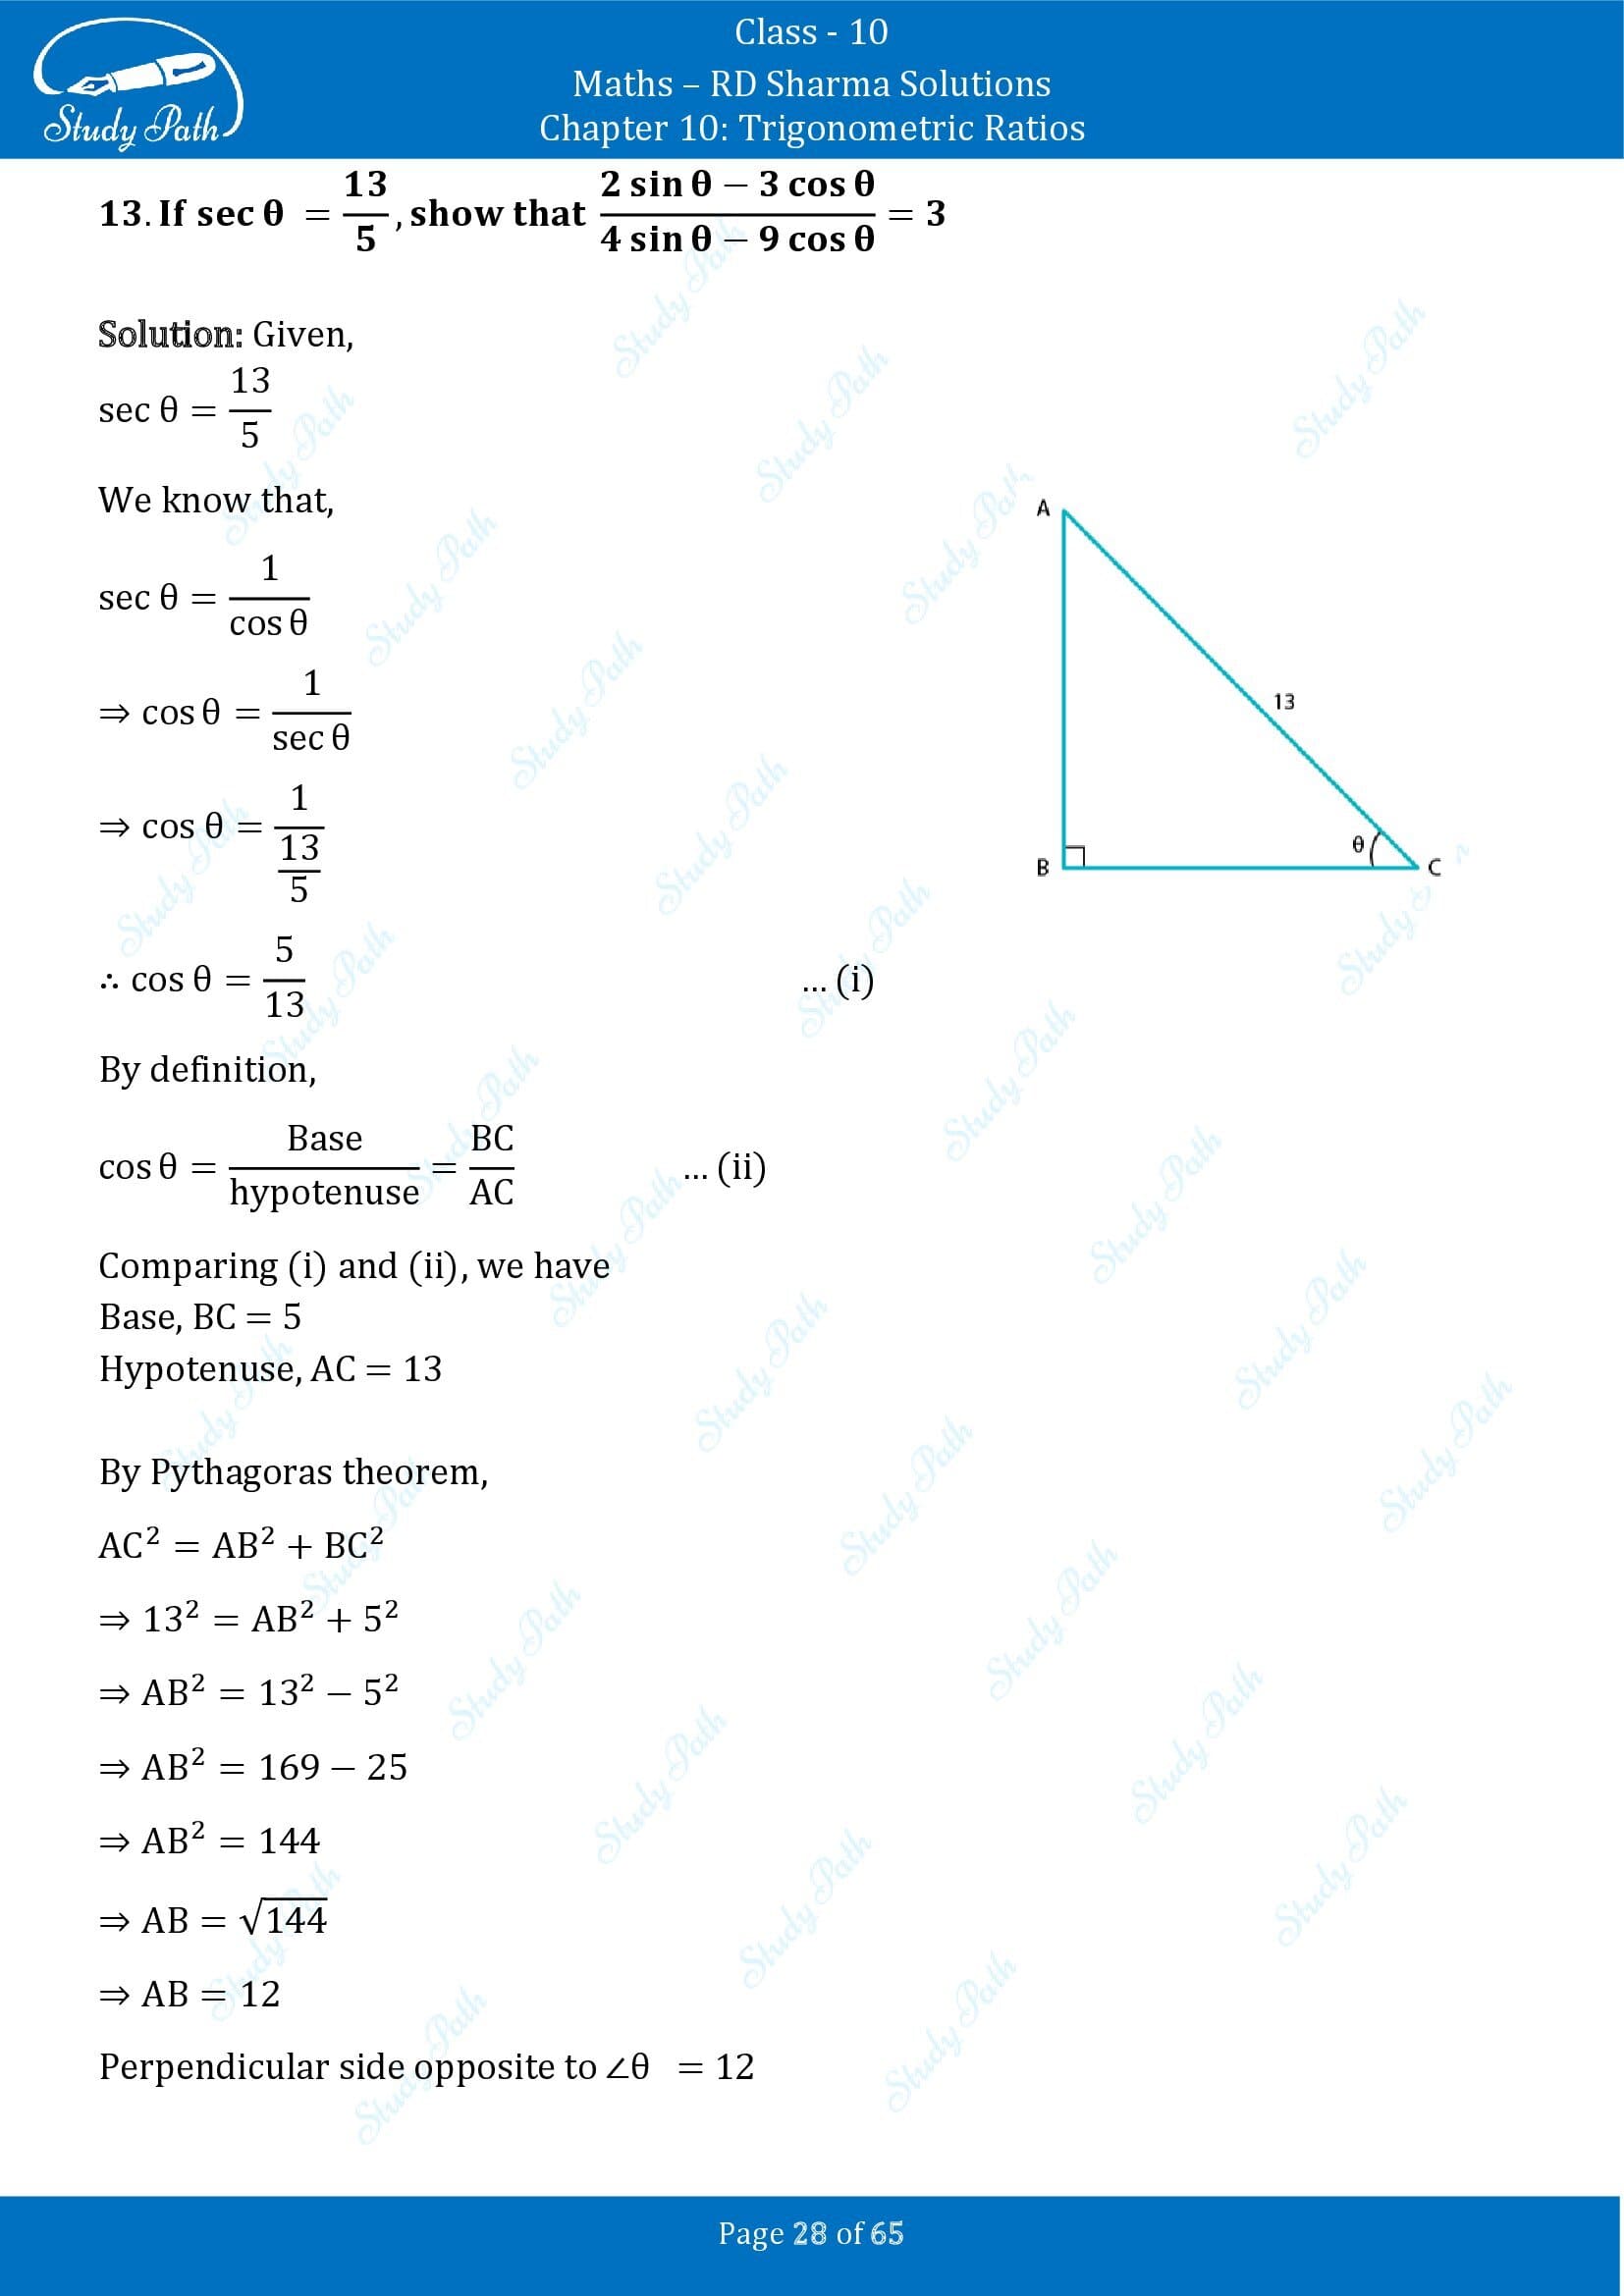 RD Sharma Solutions Class 10 Chapter 10 Trigonometric Ratios Exercise 10.1 00028